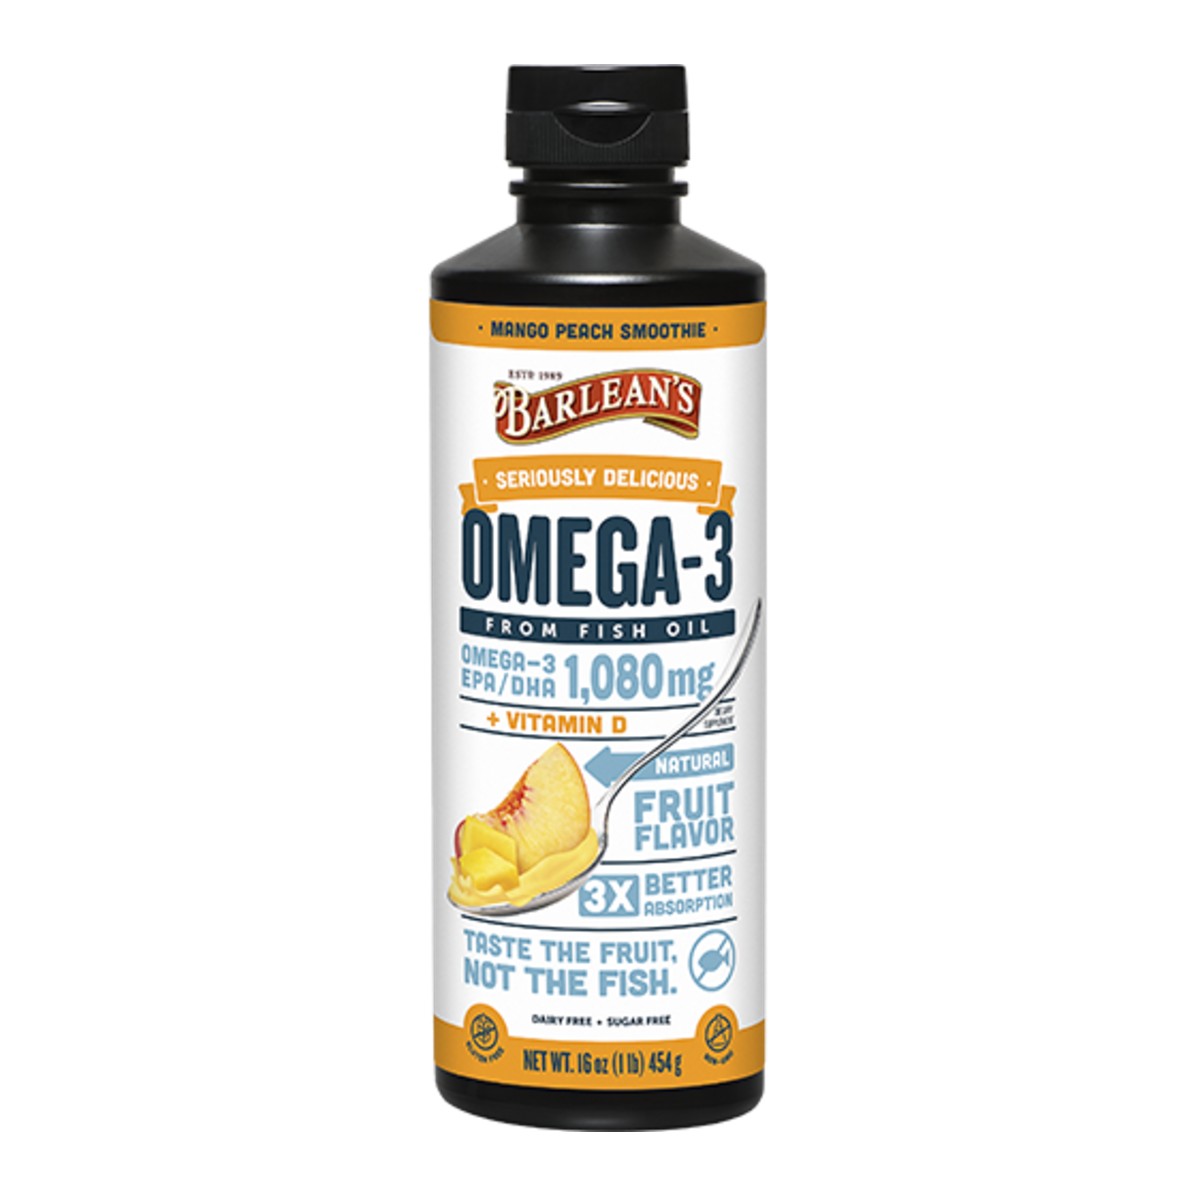 Omega-3 Fish Oil Mango Peach Smoothie - Barleans